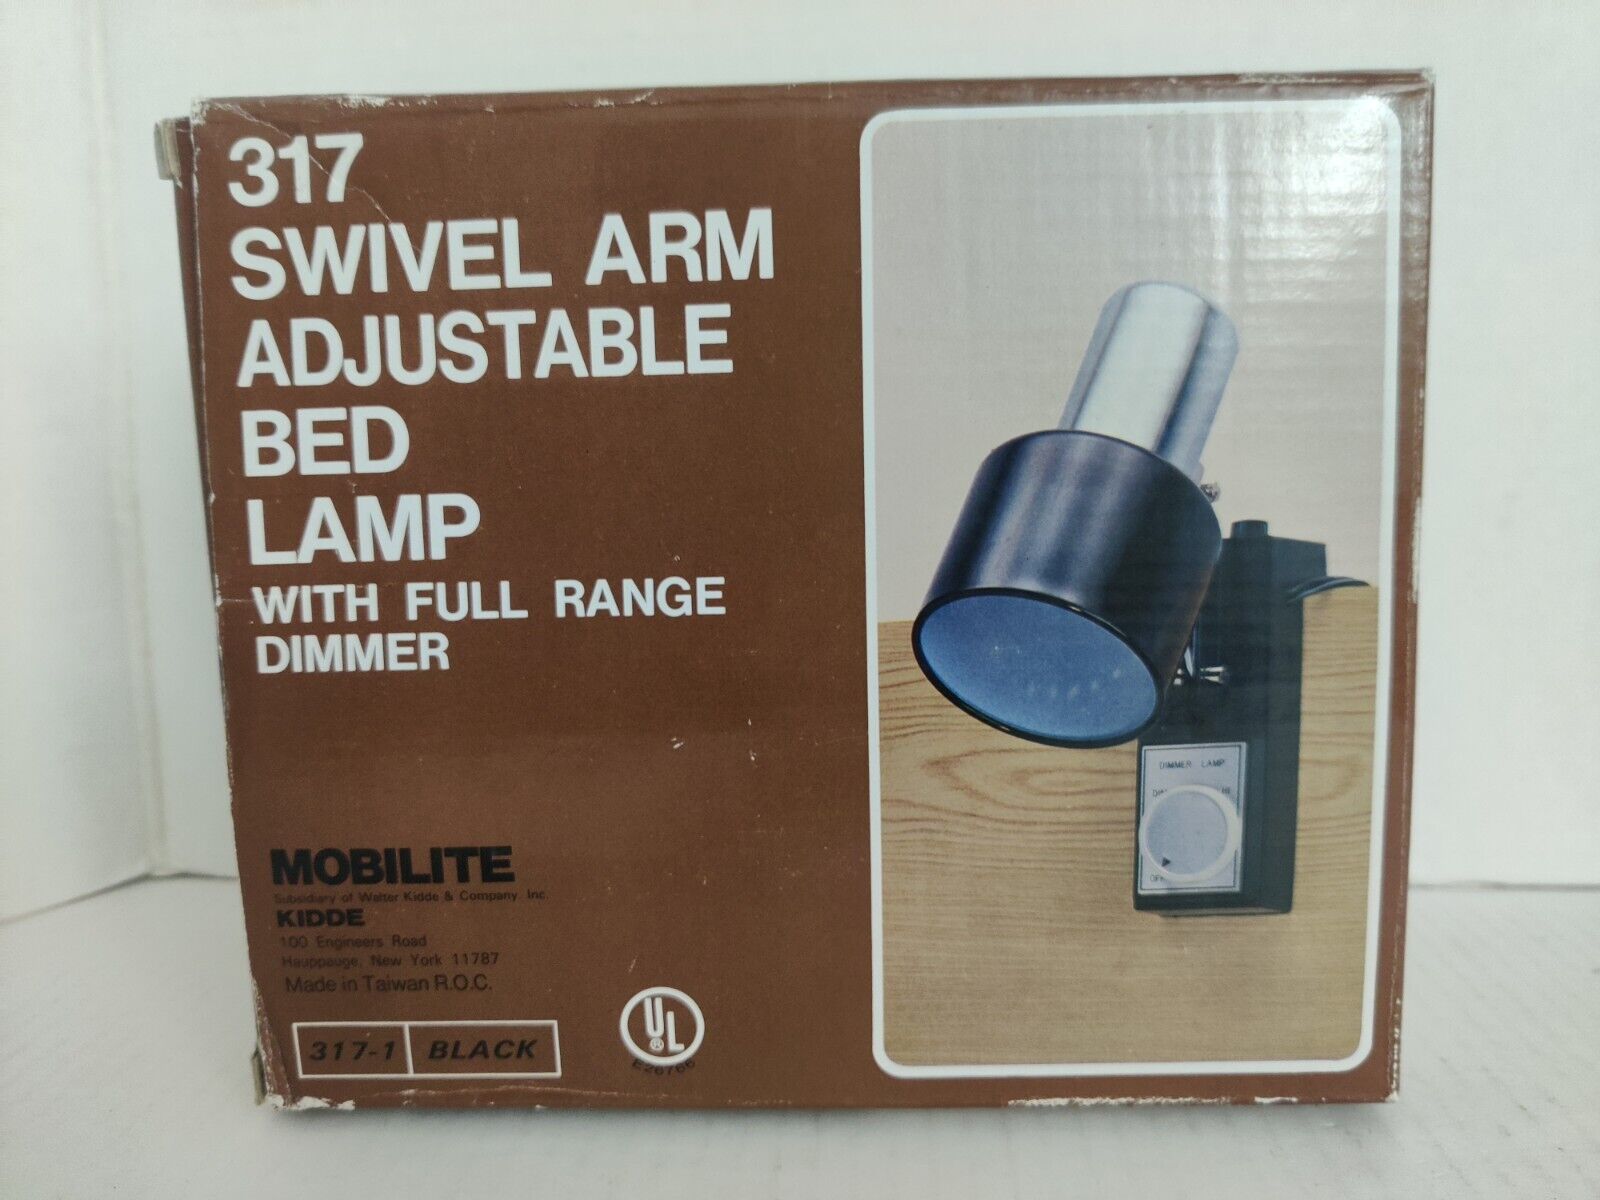 New Vintage Mobilite Swivel Arm Adjustable Bed Lamp Full Range Dimmer Model 317 